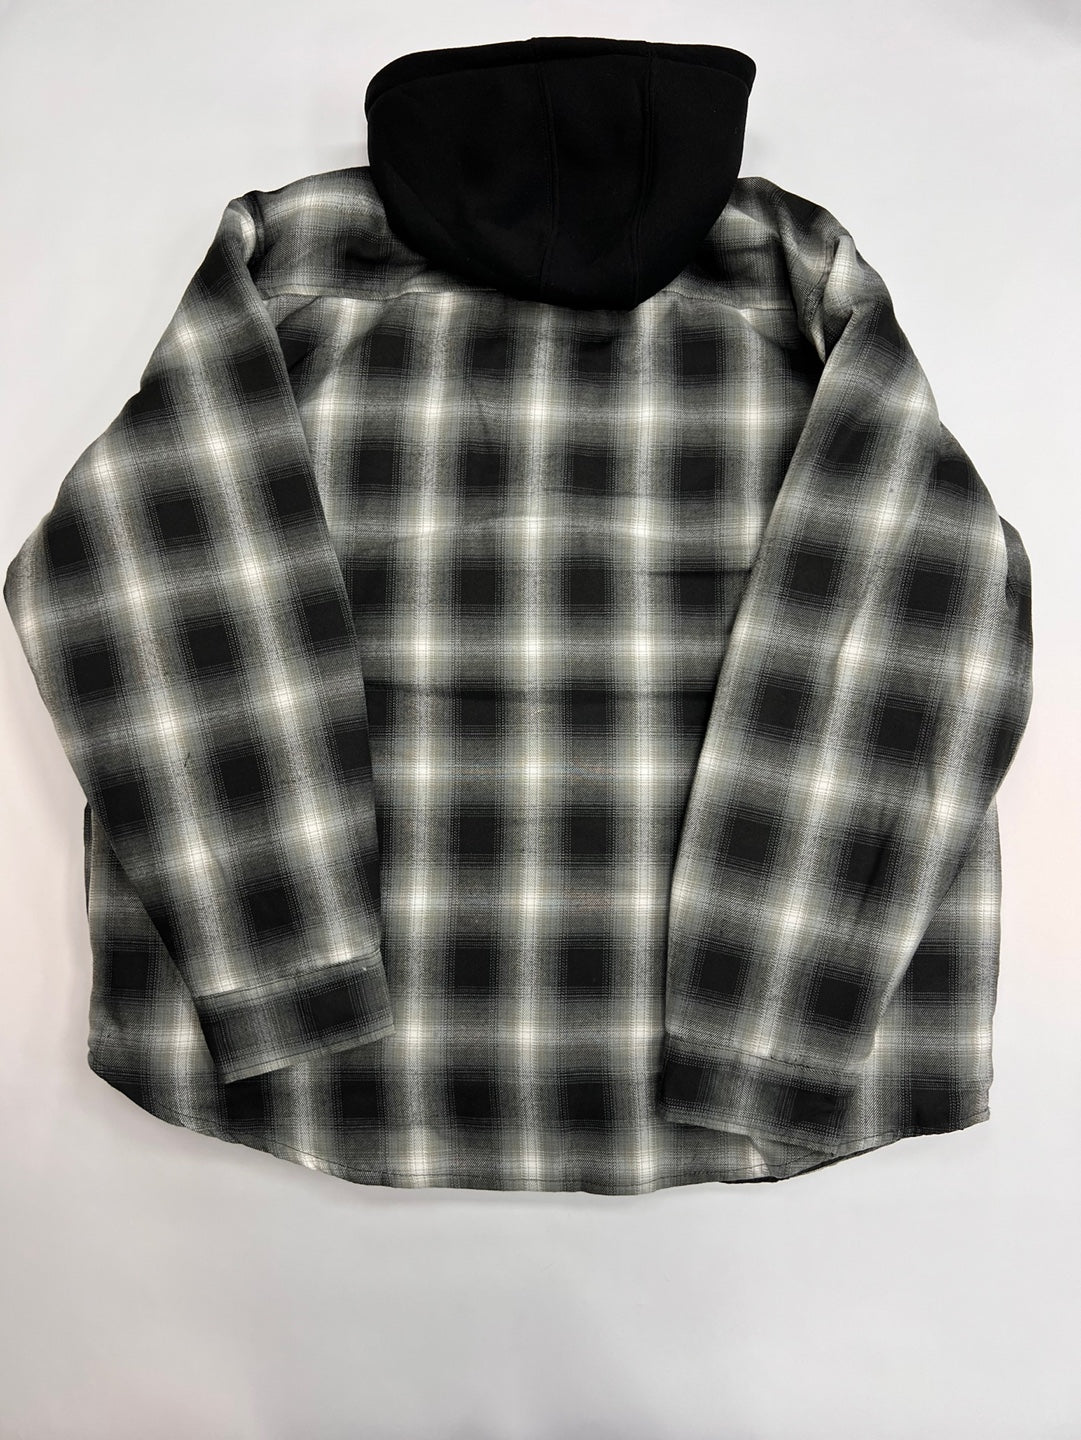 Men's Winter Hooded Quilt Plaid Jacket